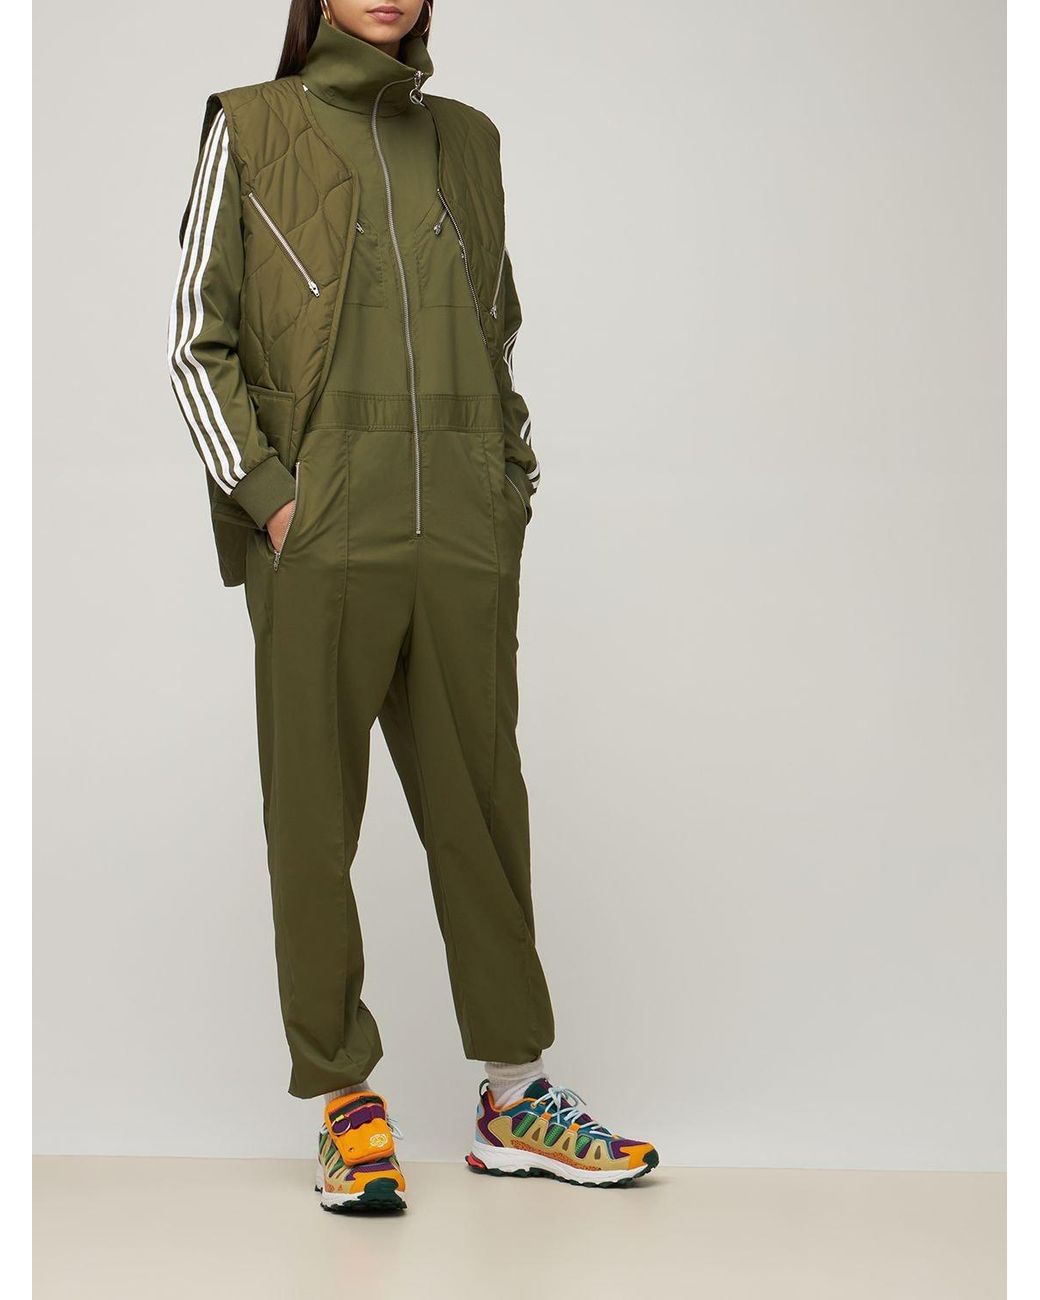 adidas Human Made Firebird Track Jacket - Green | adidas US | Track  jackets, Jackets, Adidas